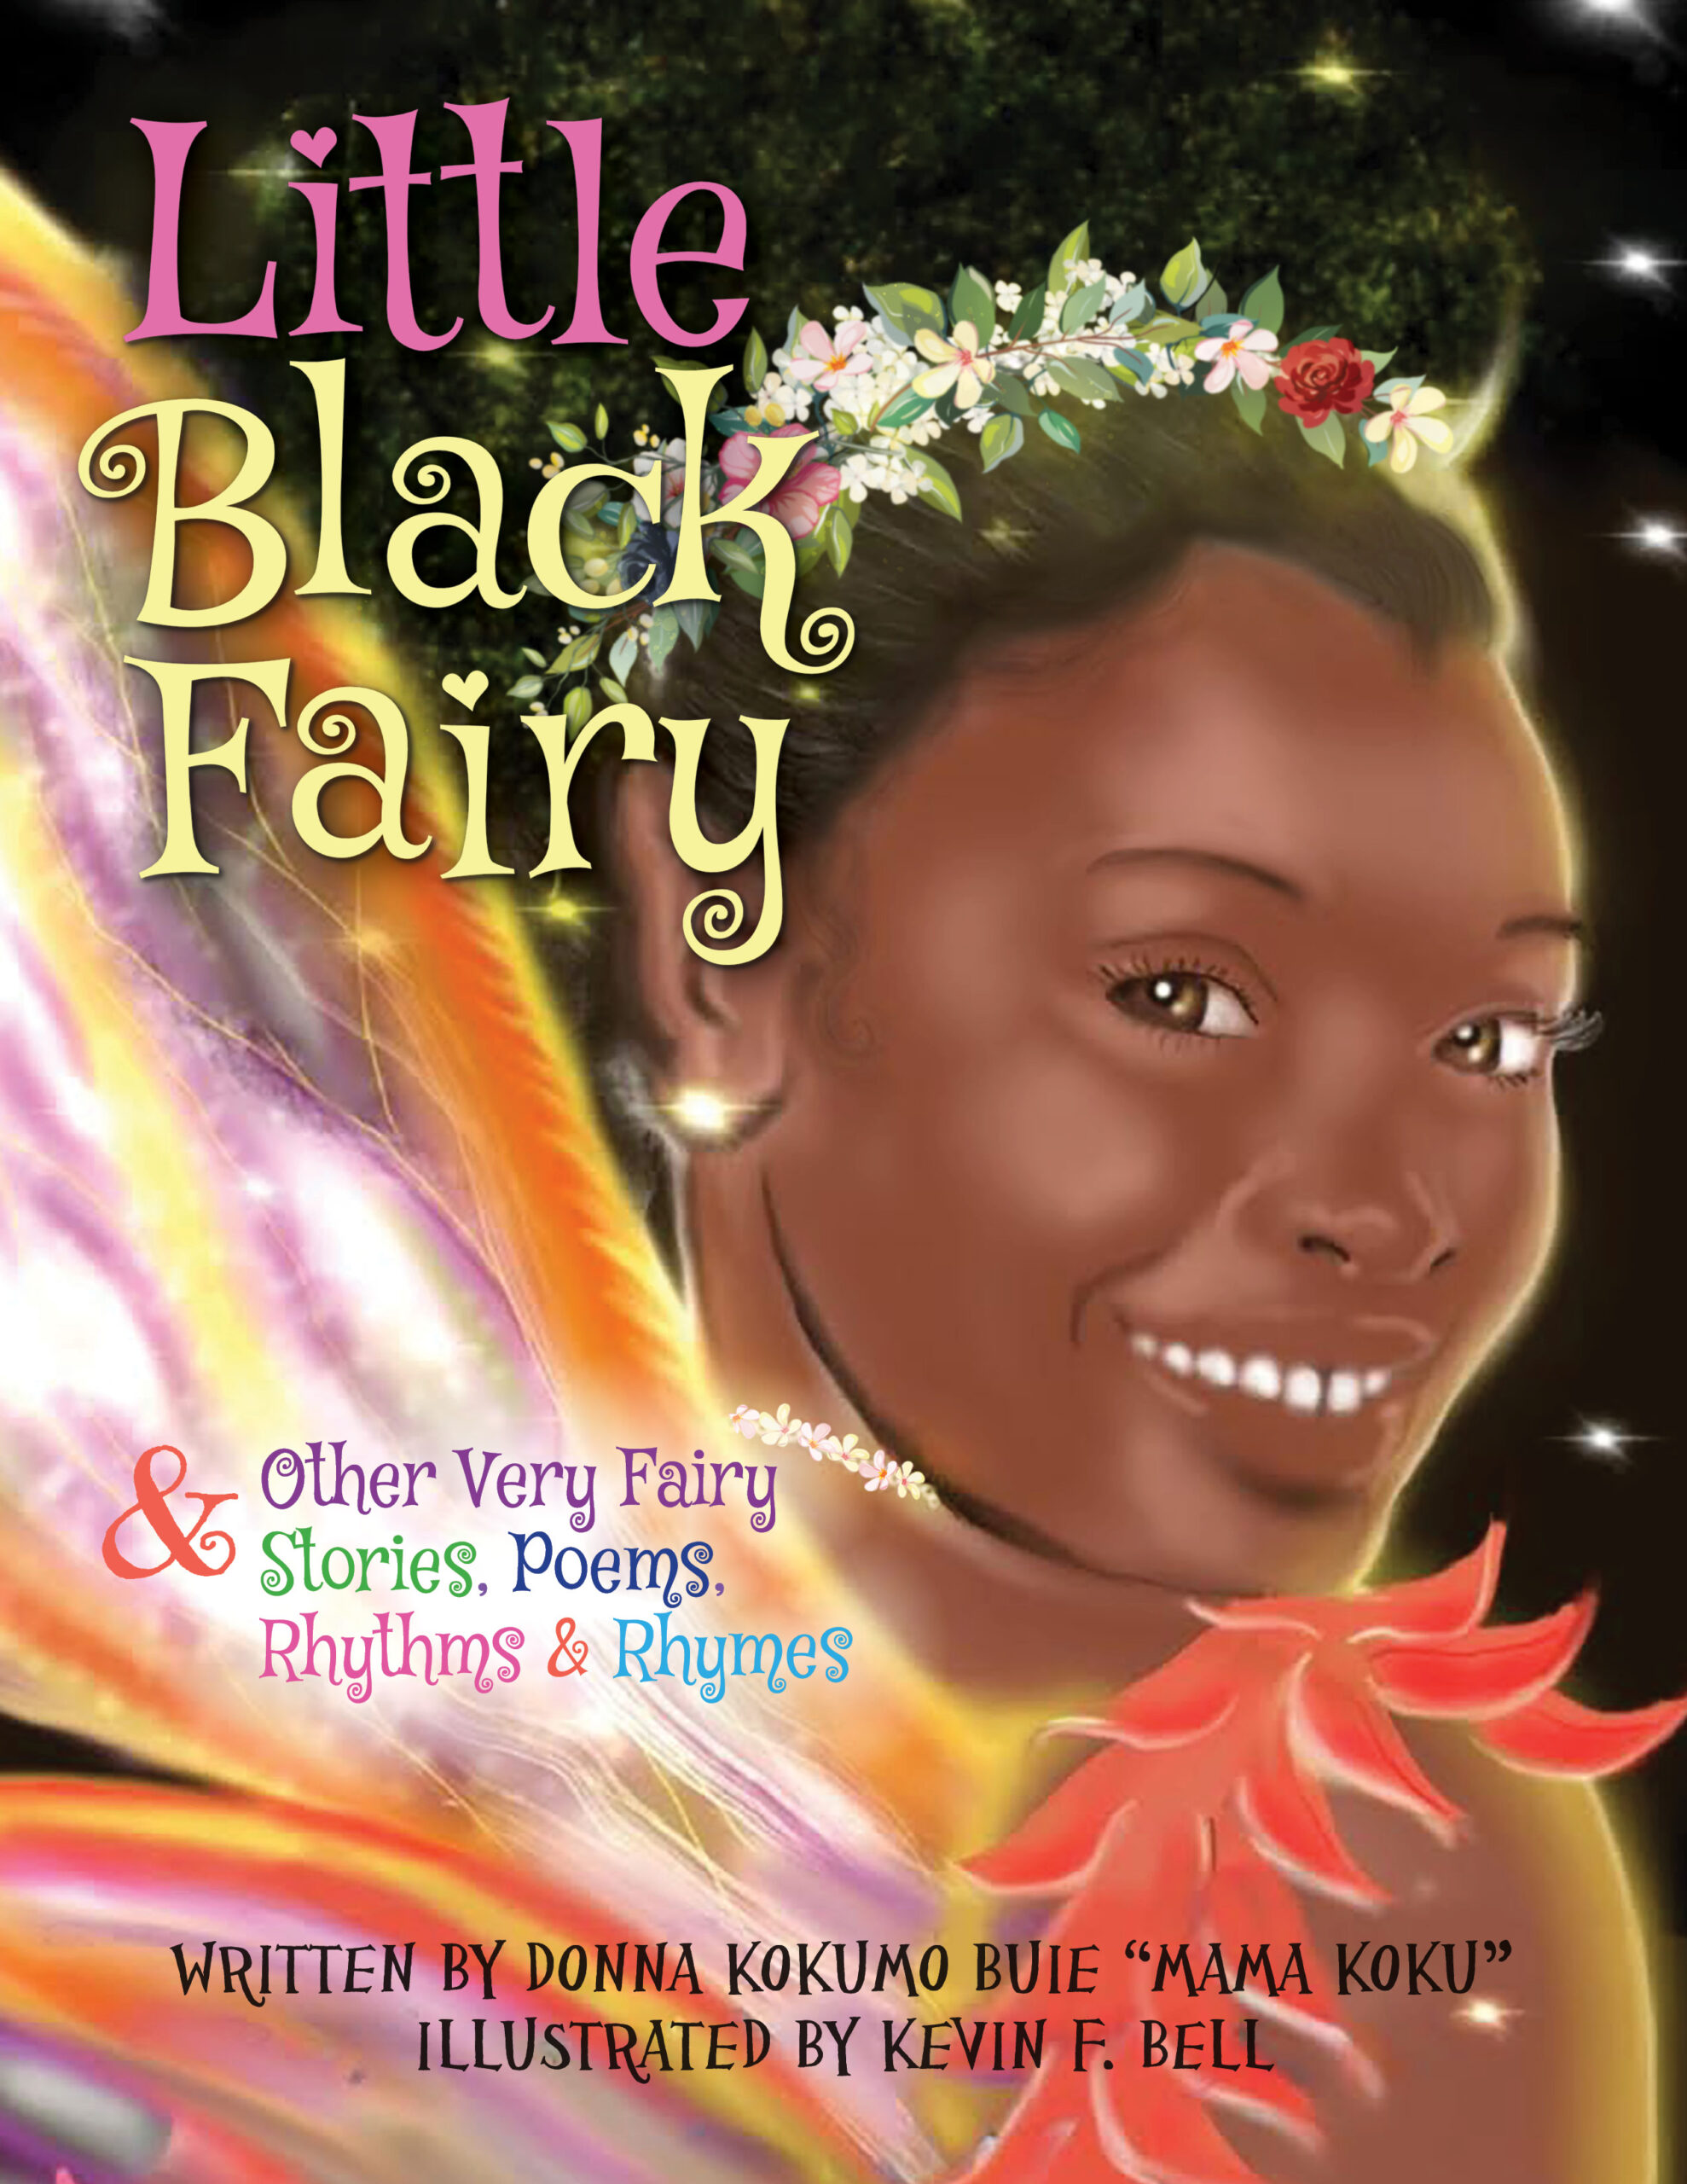 Little Black Fairy & Other Very Fairy Stories, Poems Rhythms & Rhymes